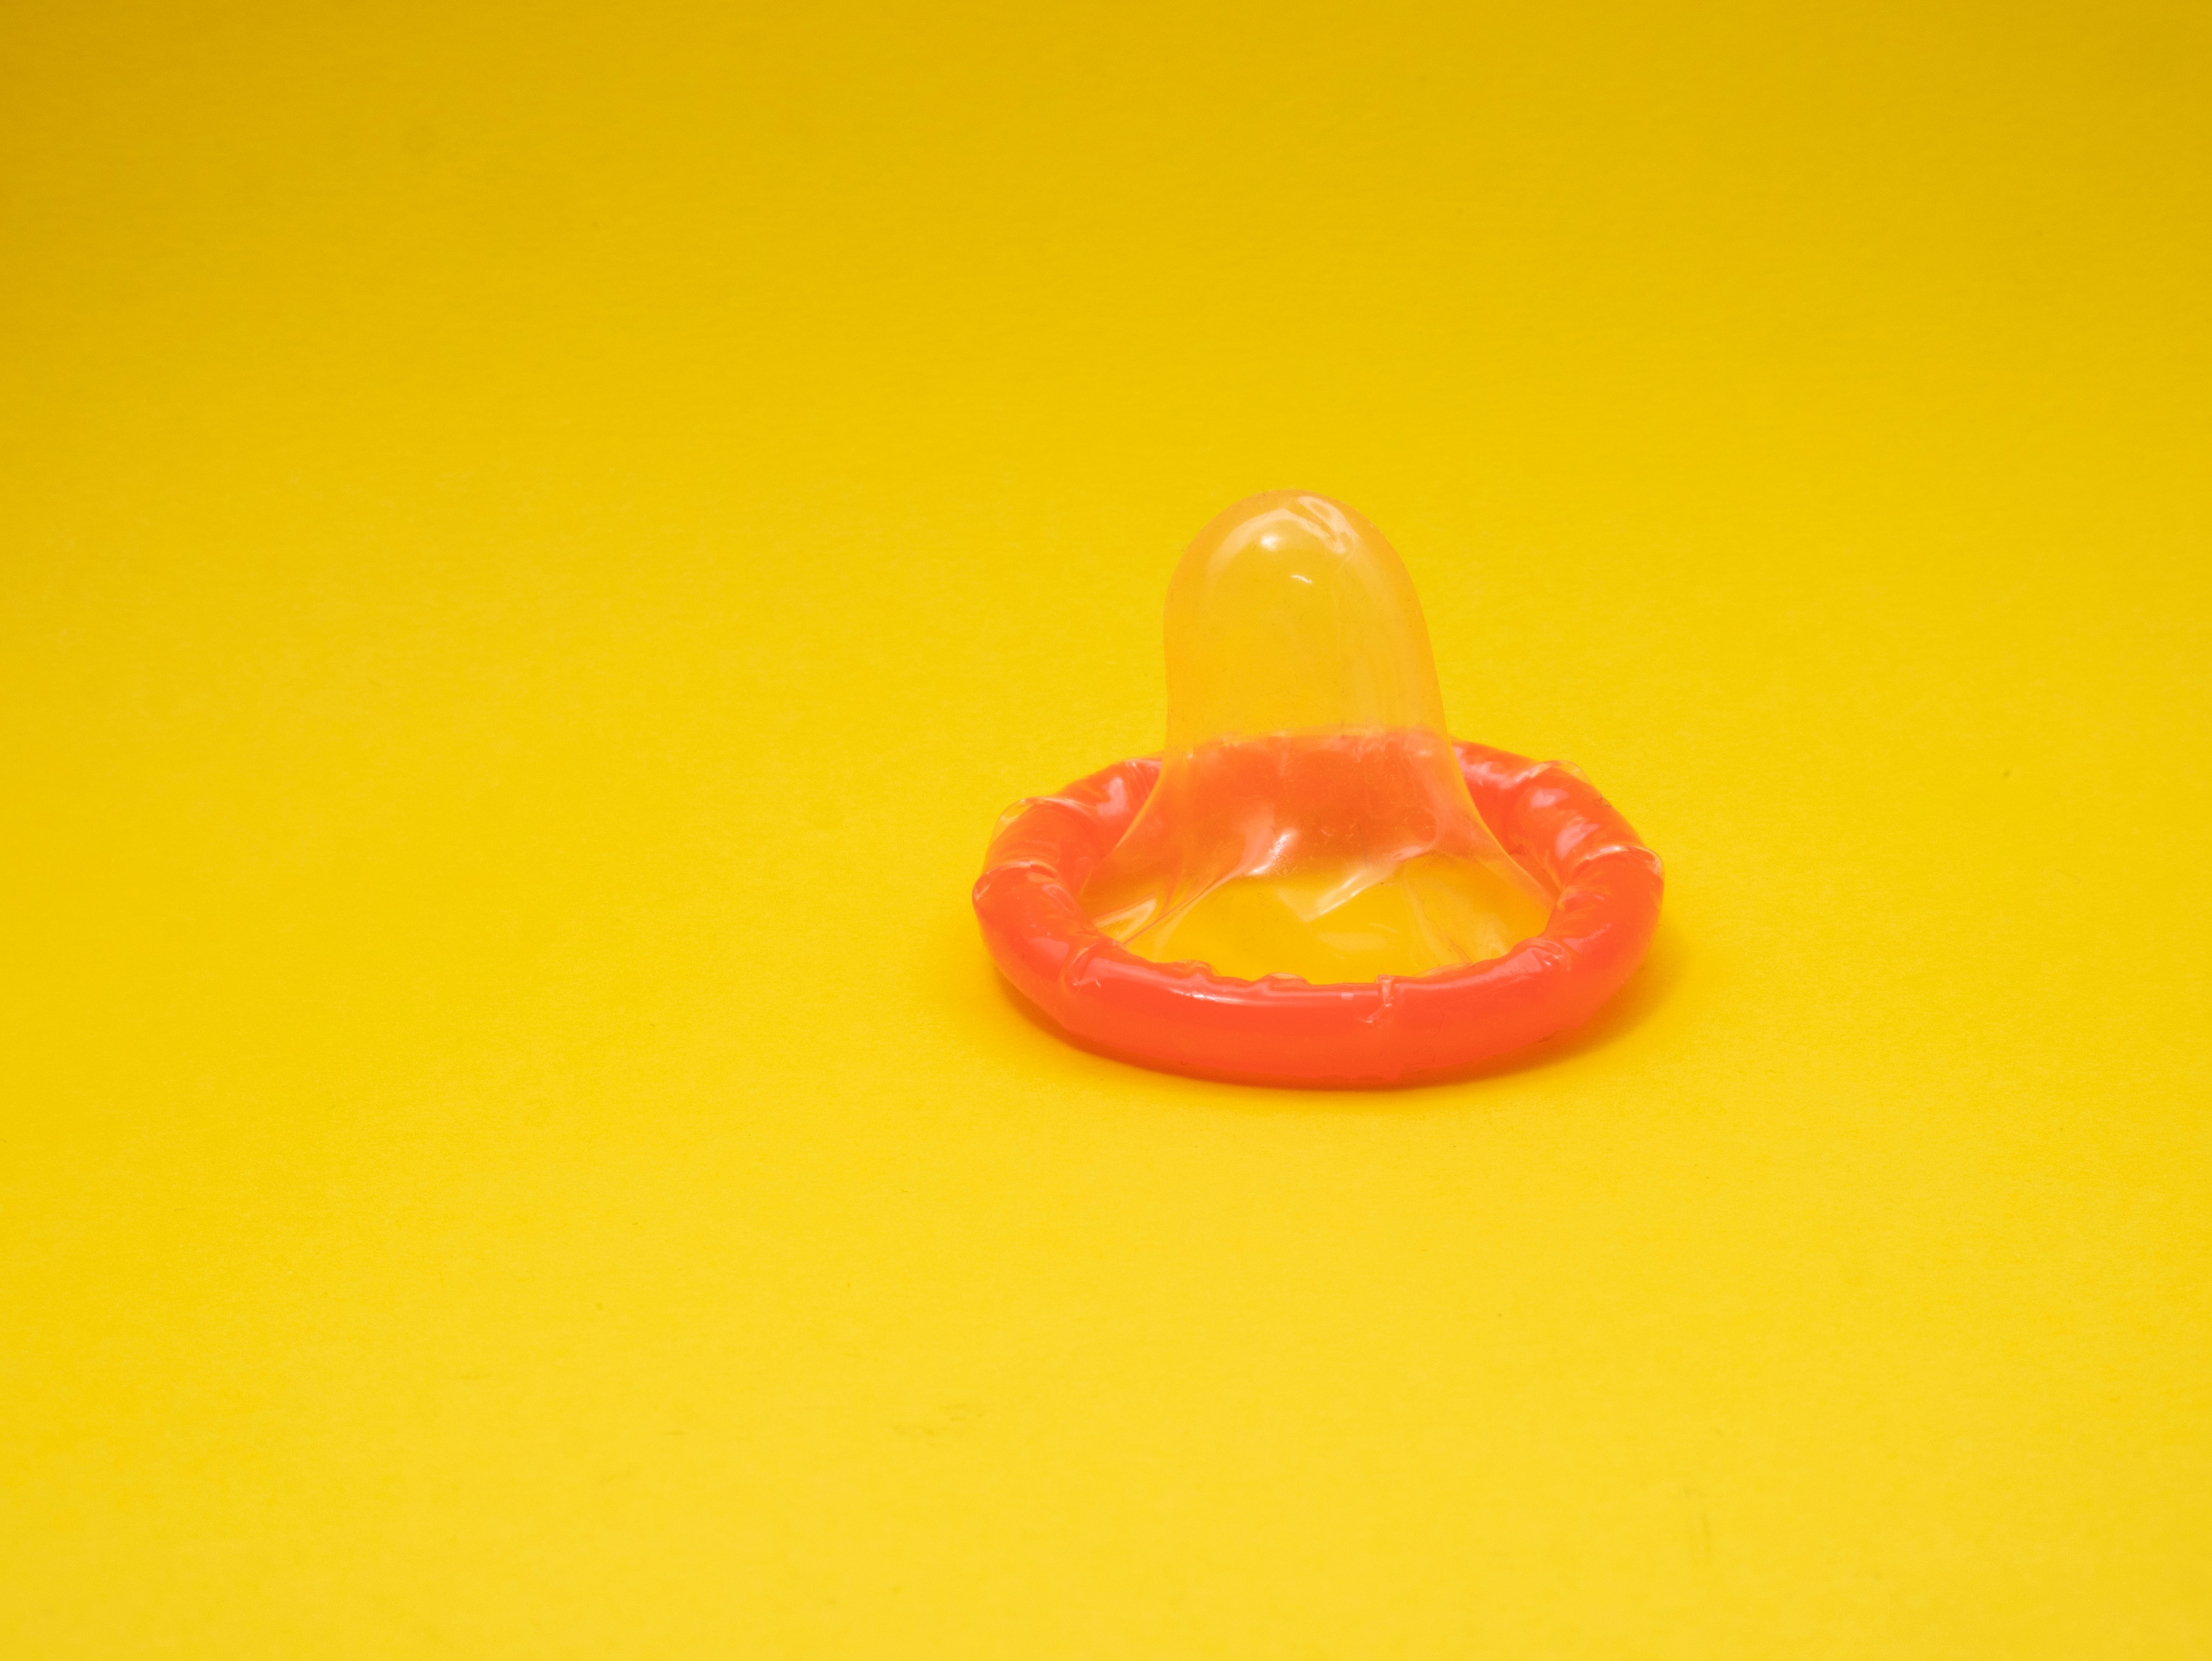 External condom